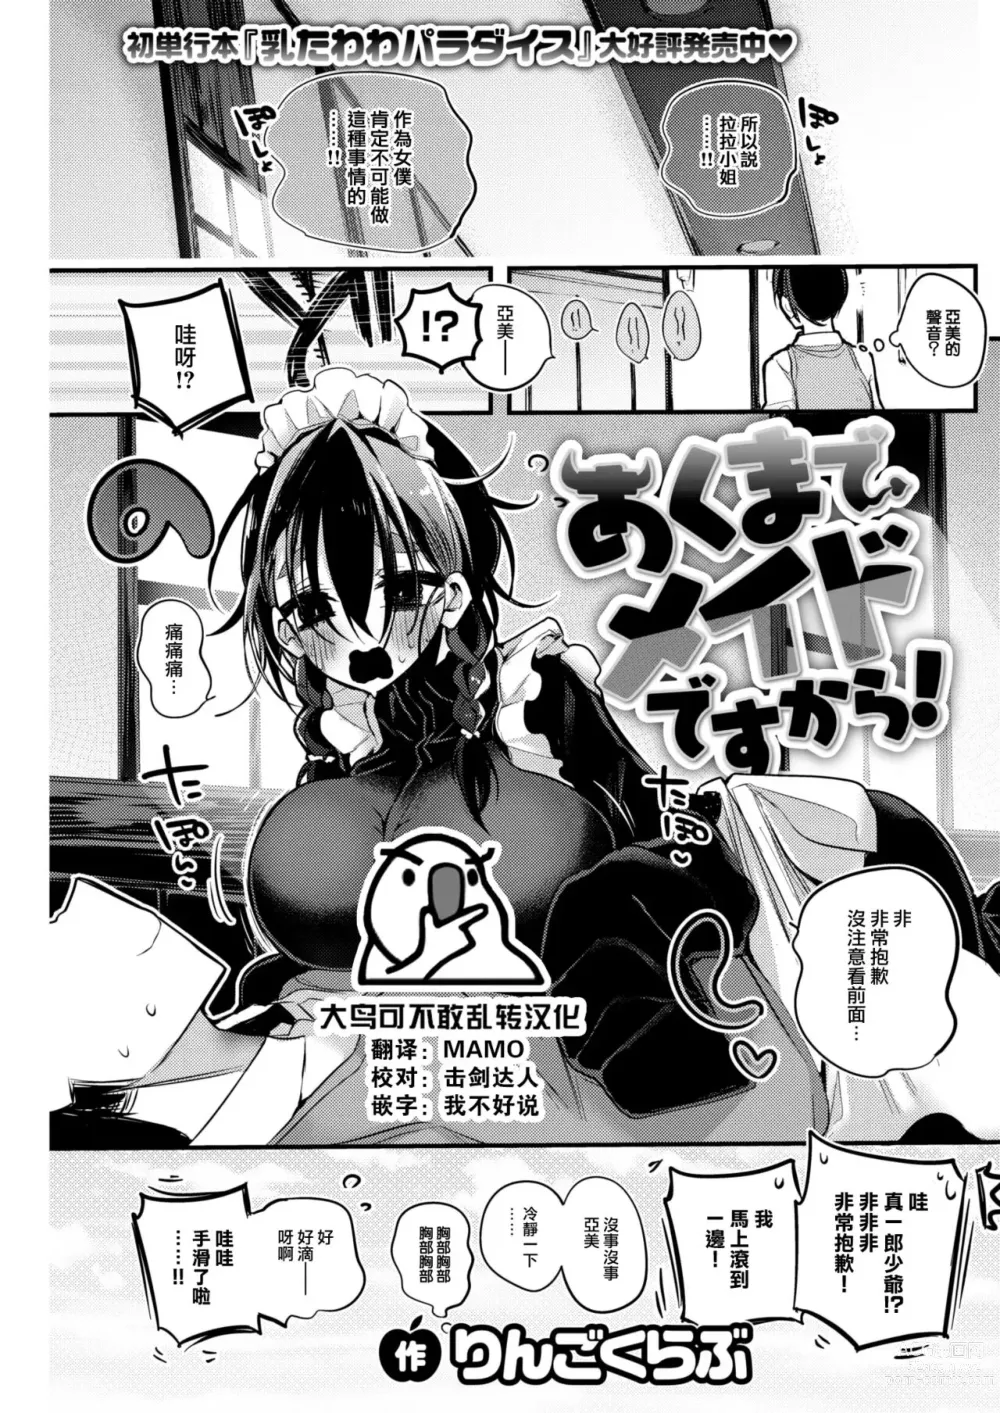 Page 1 of manga Akumade Maid desukara!